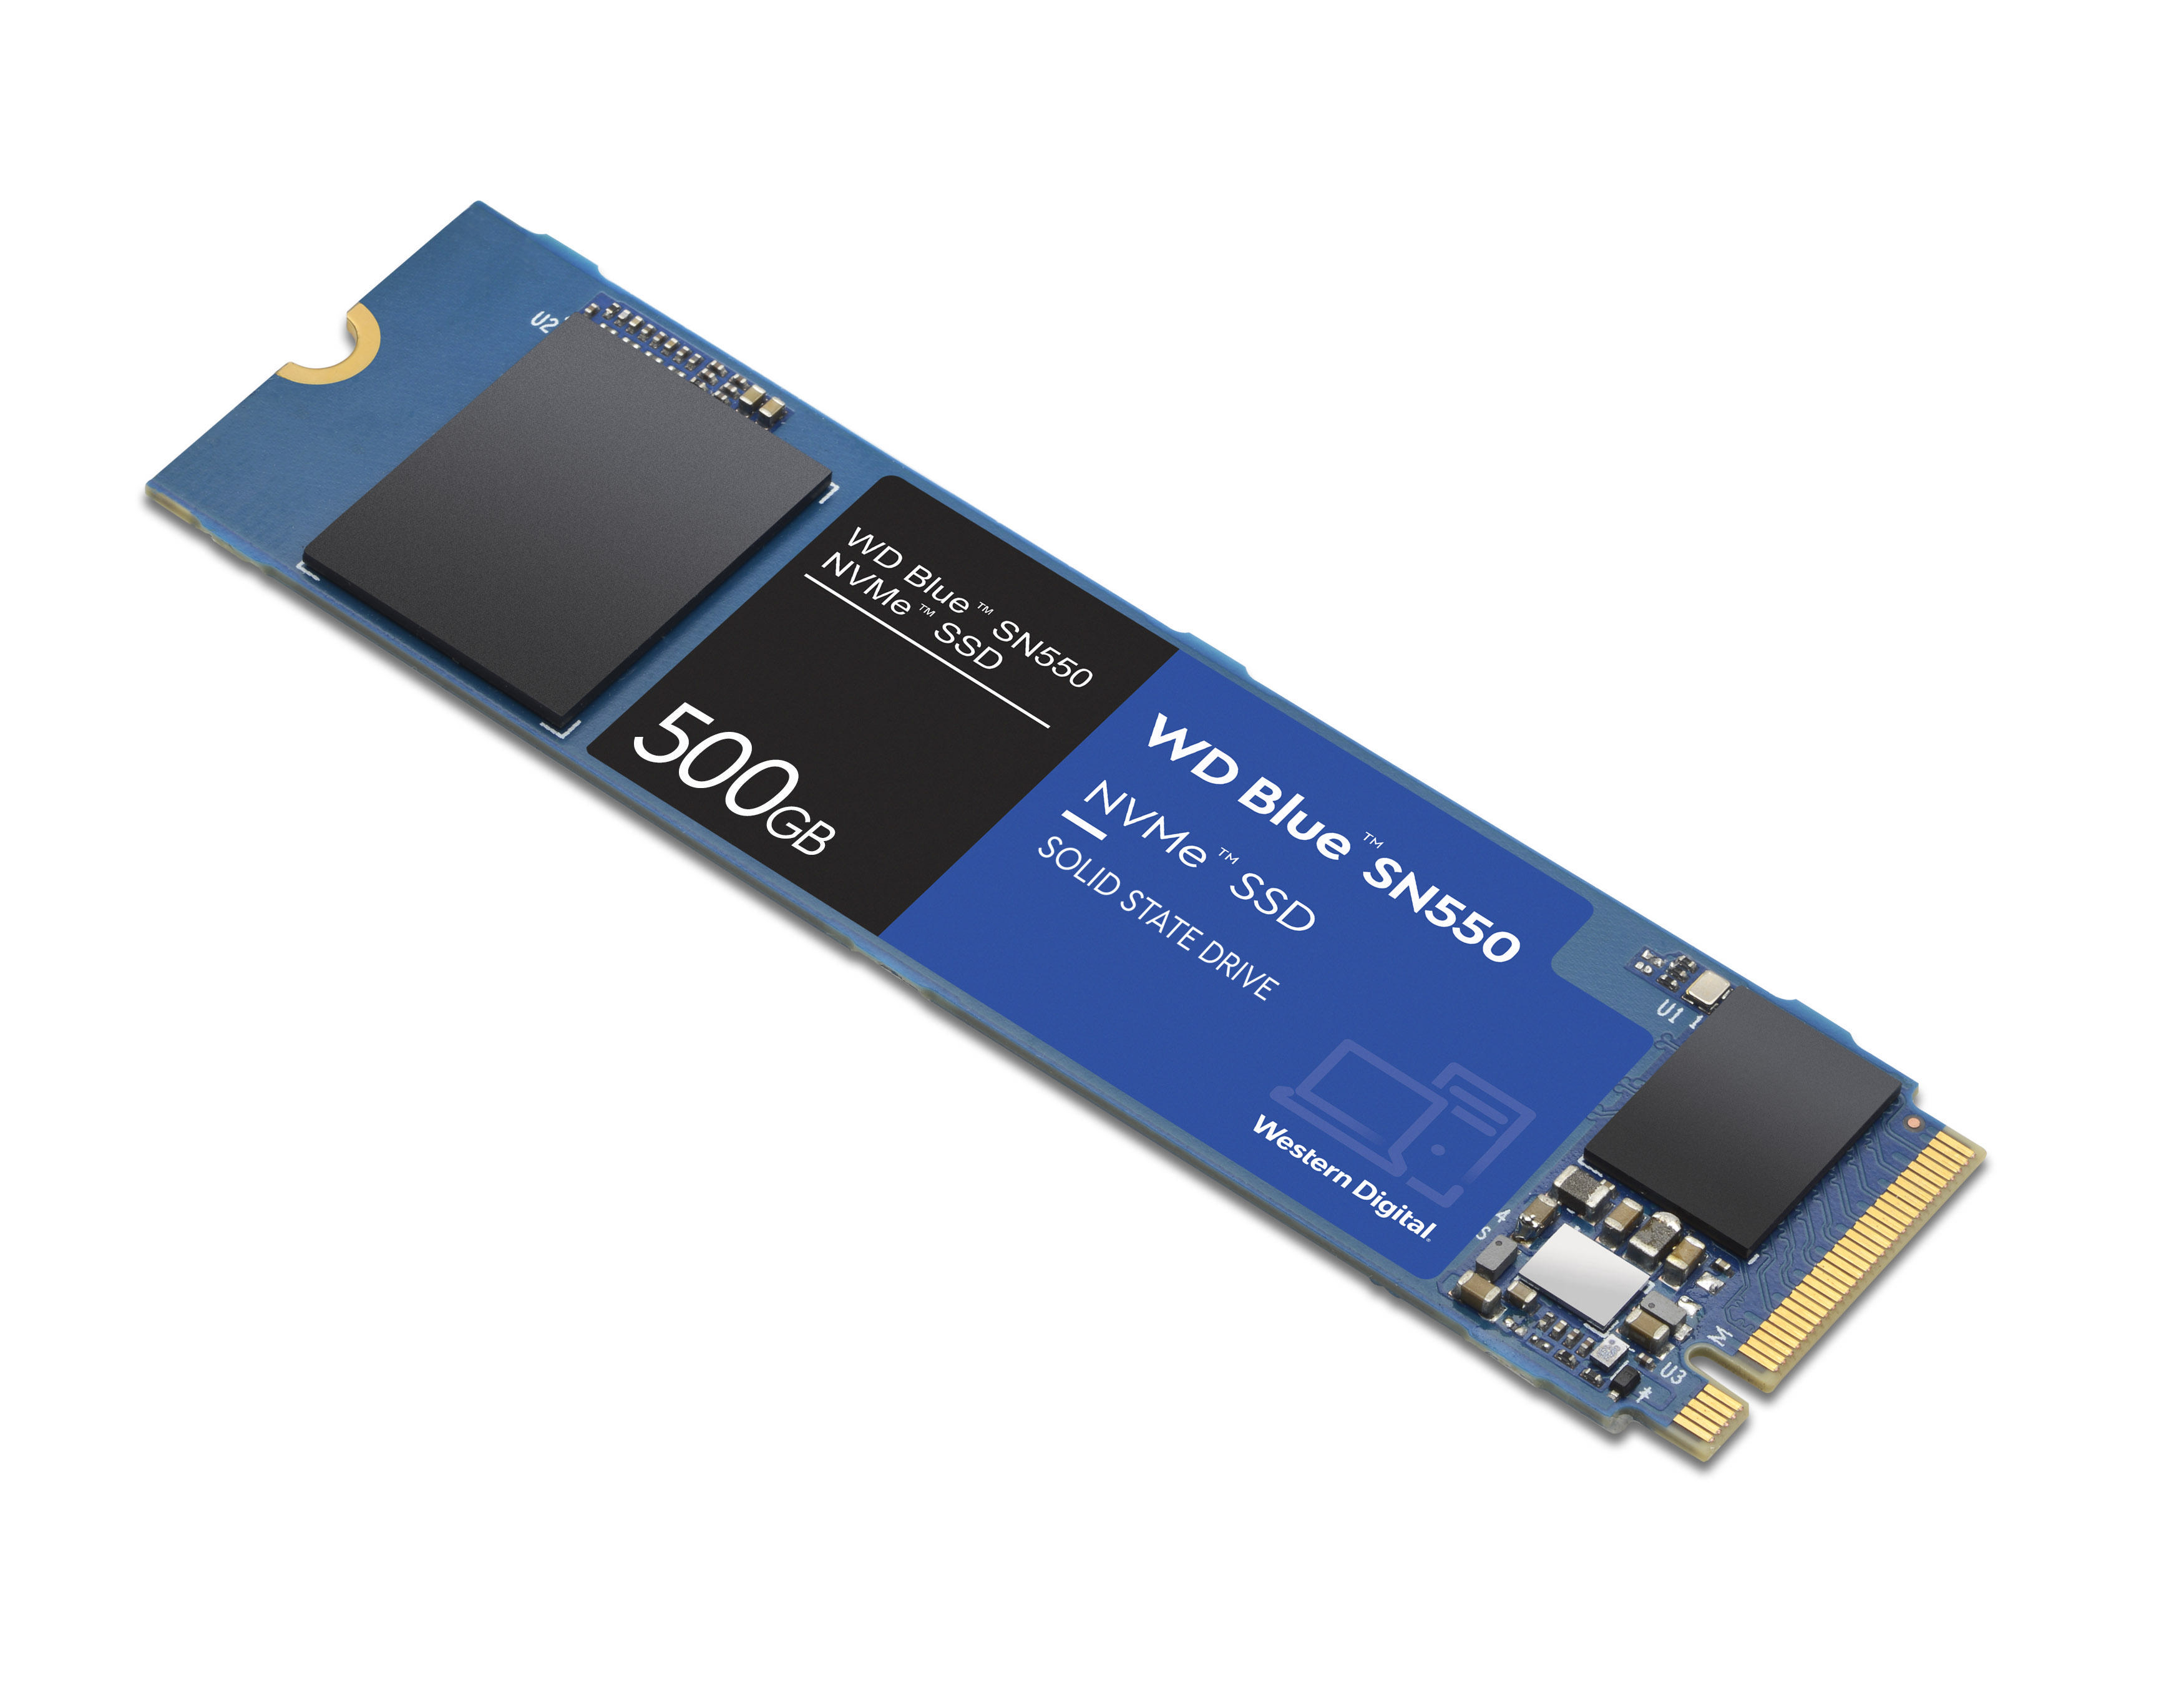 WD Blue™ SN550 Speicher, 500 SSD GB intern PCIe, M.2 via